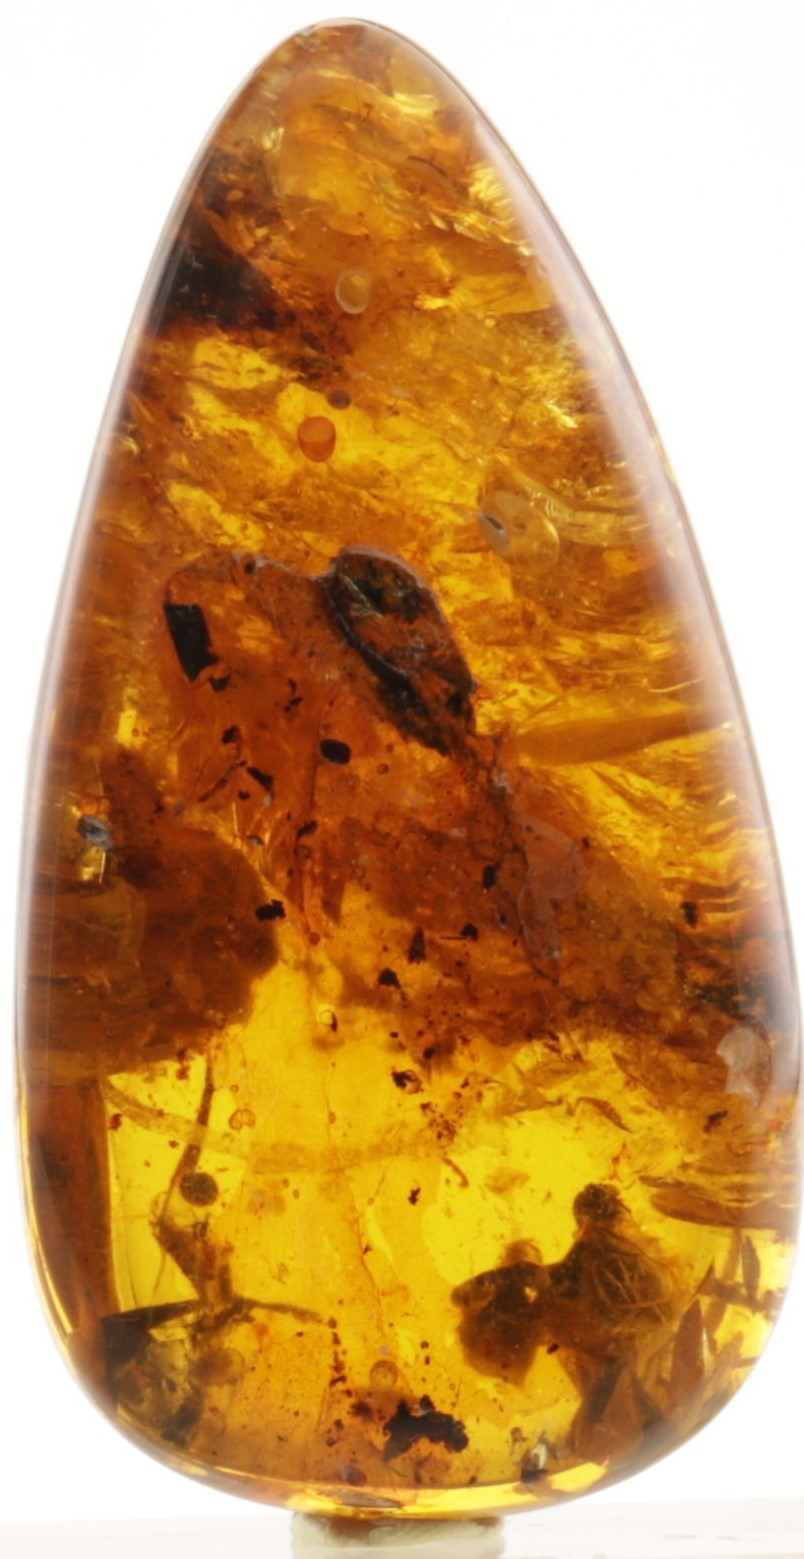 anurognathid in cretaceous amber